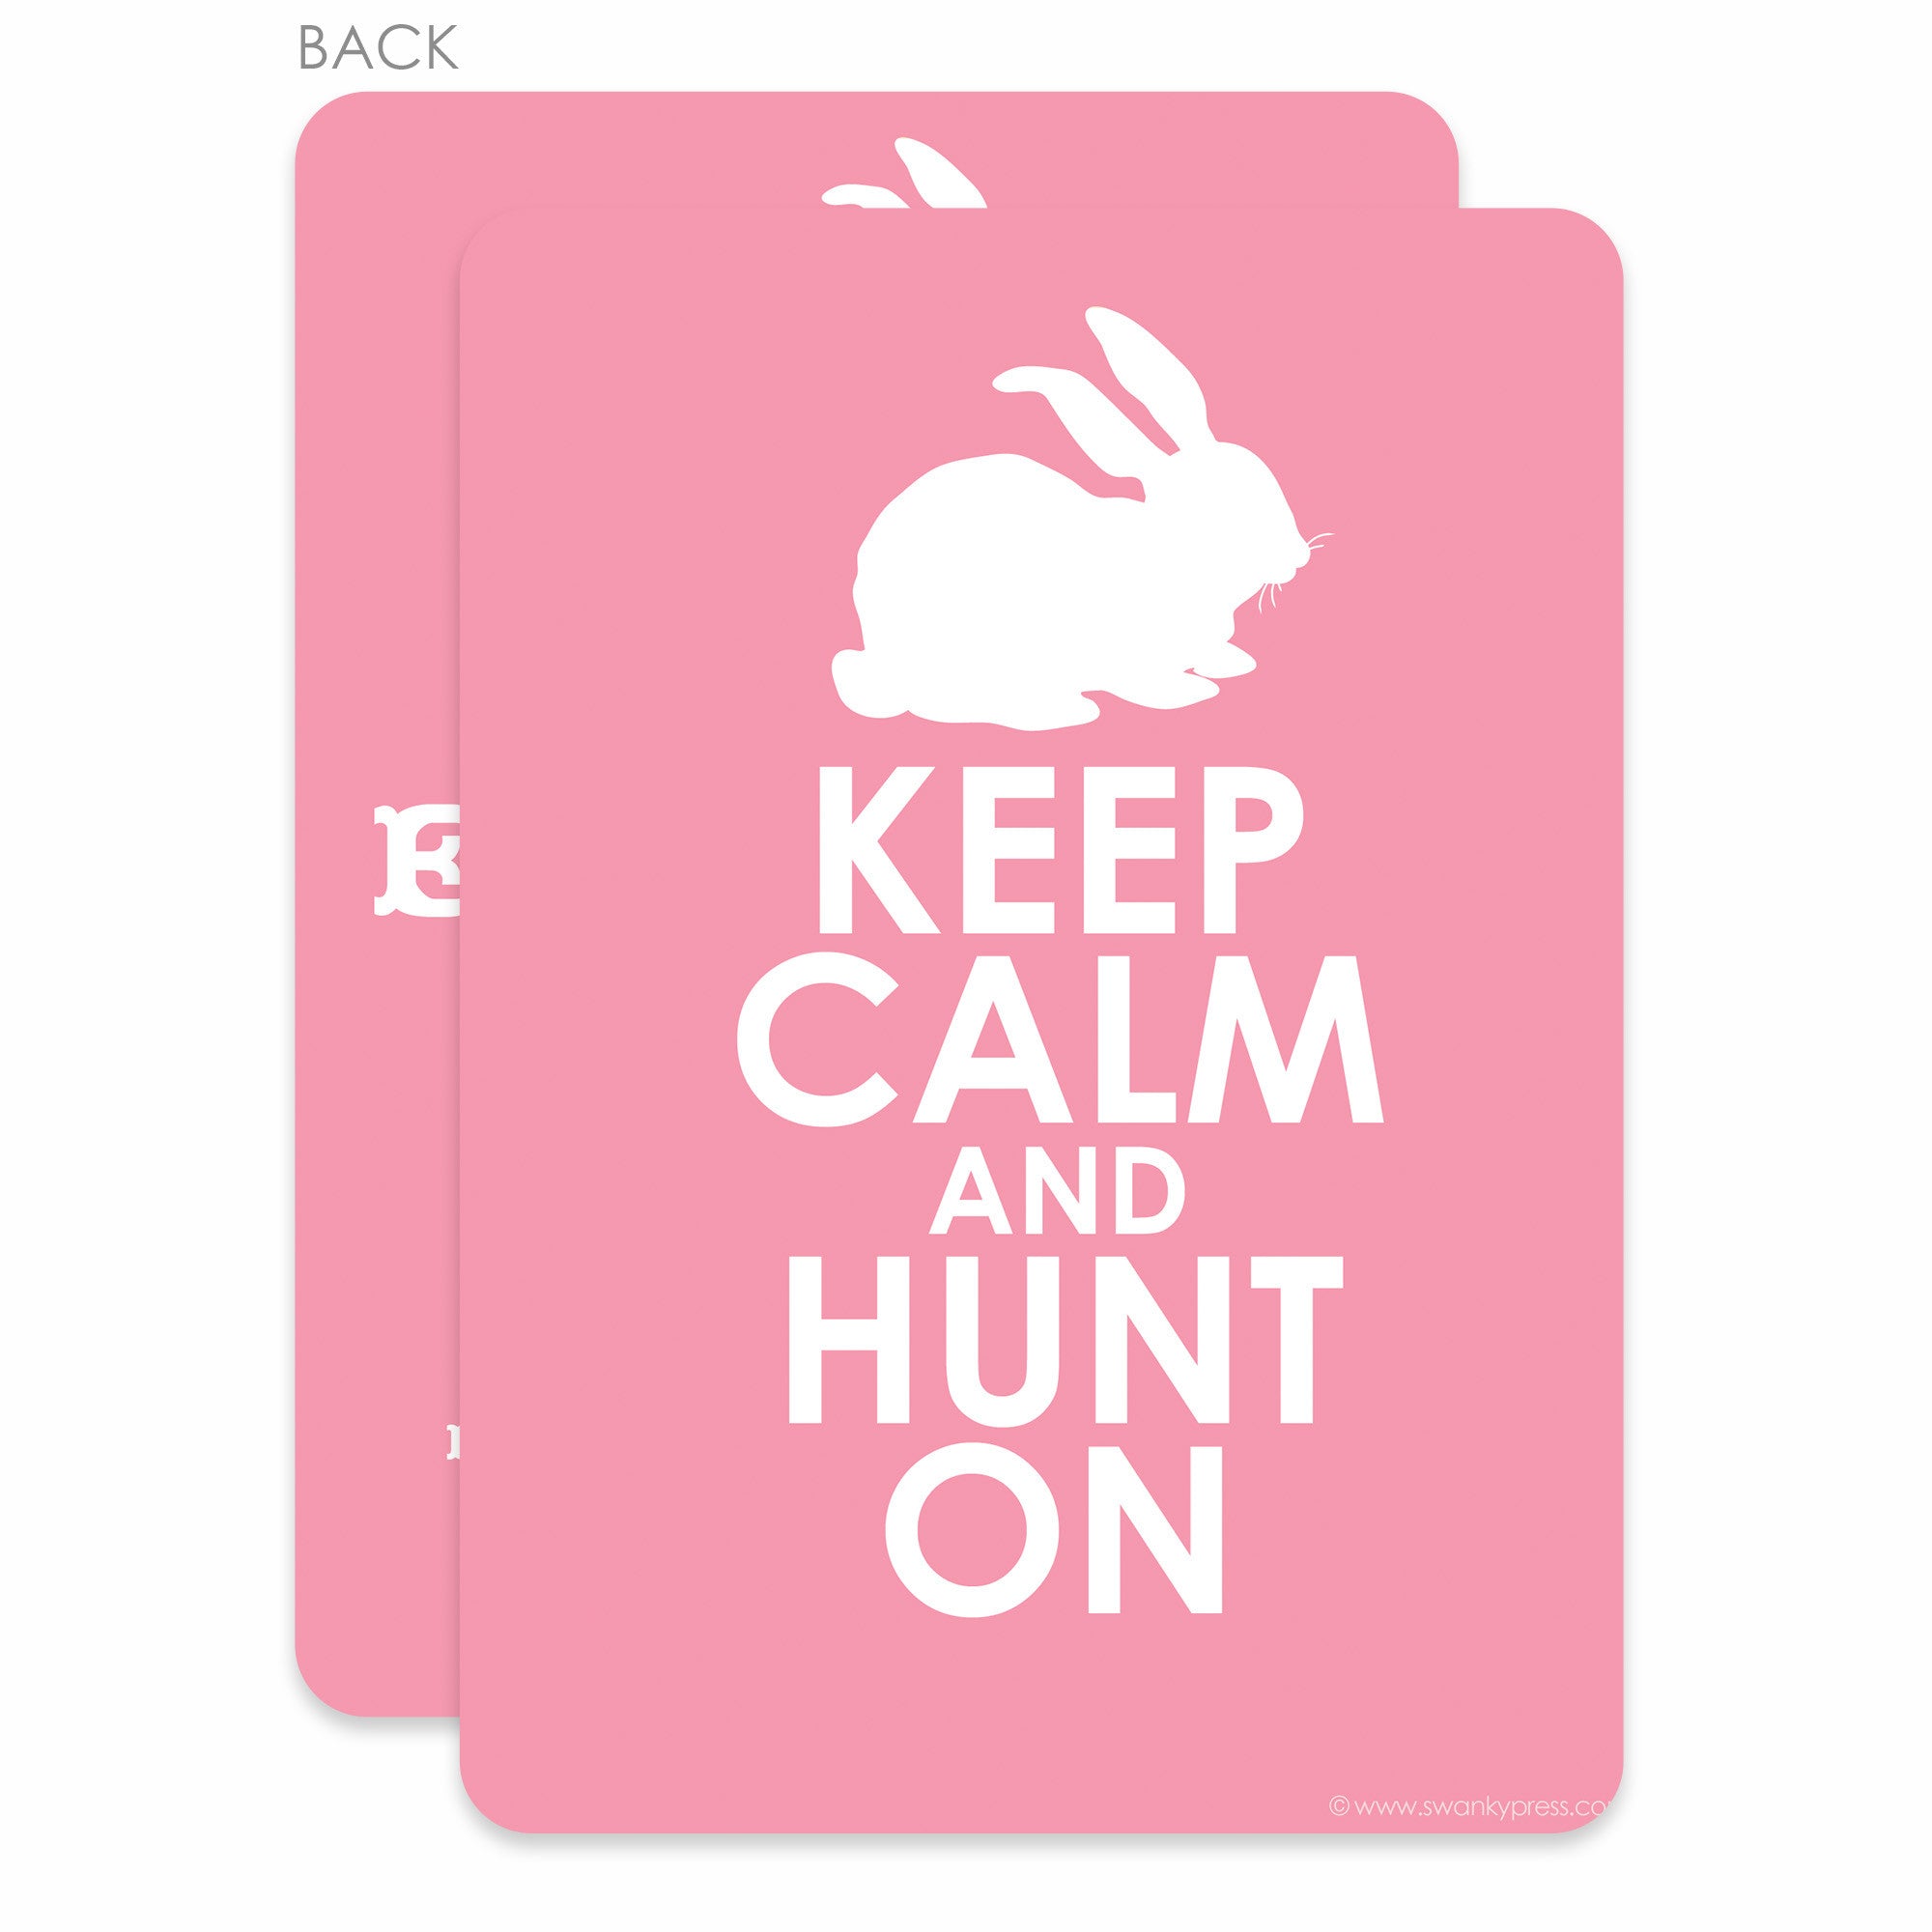 Easter Egg Hunt Invitation, Printed on premium cardstock from Pipsy.com